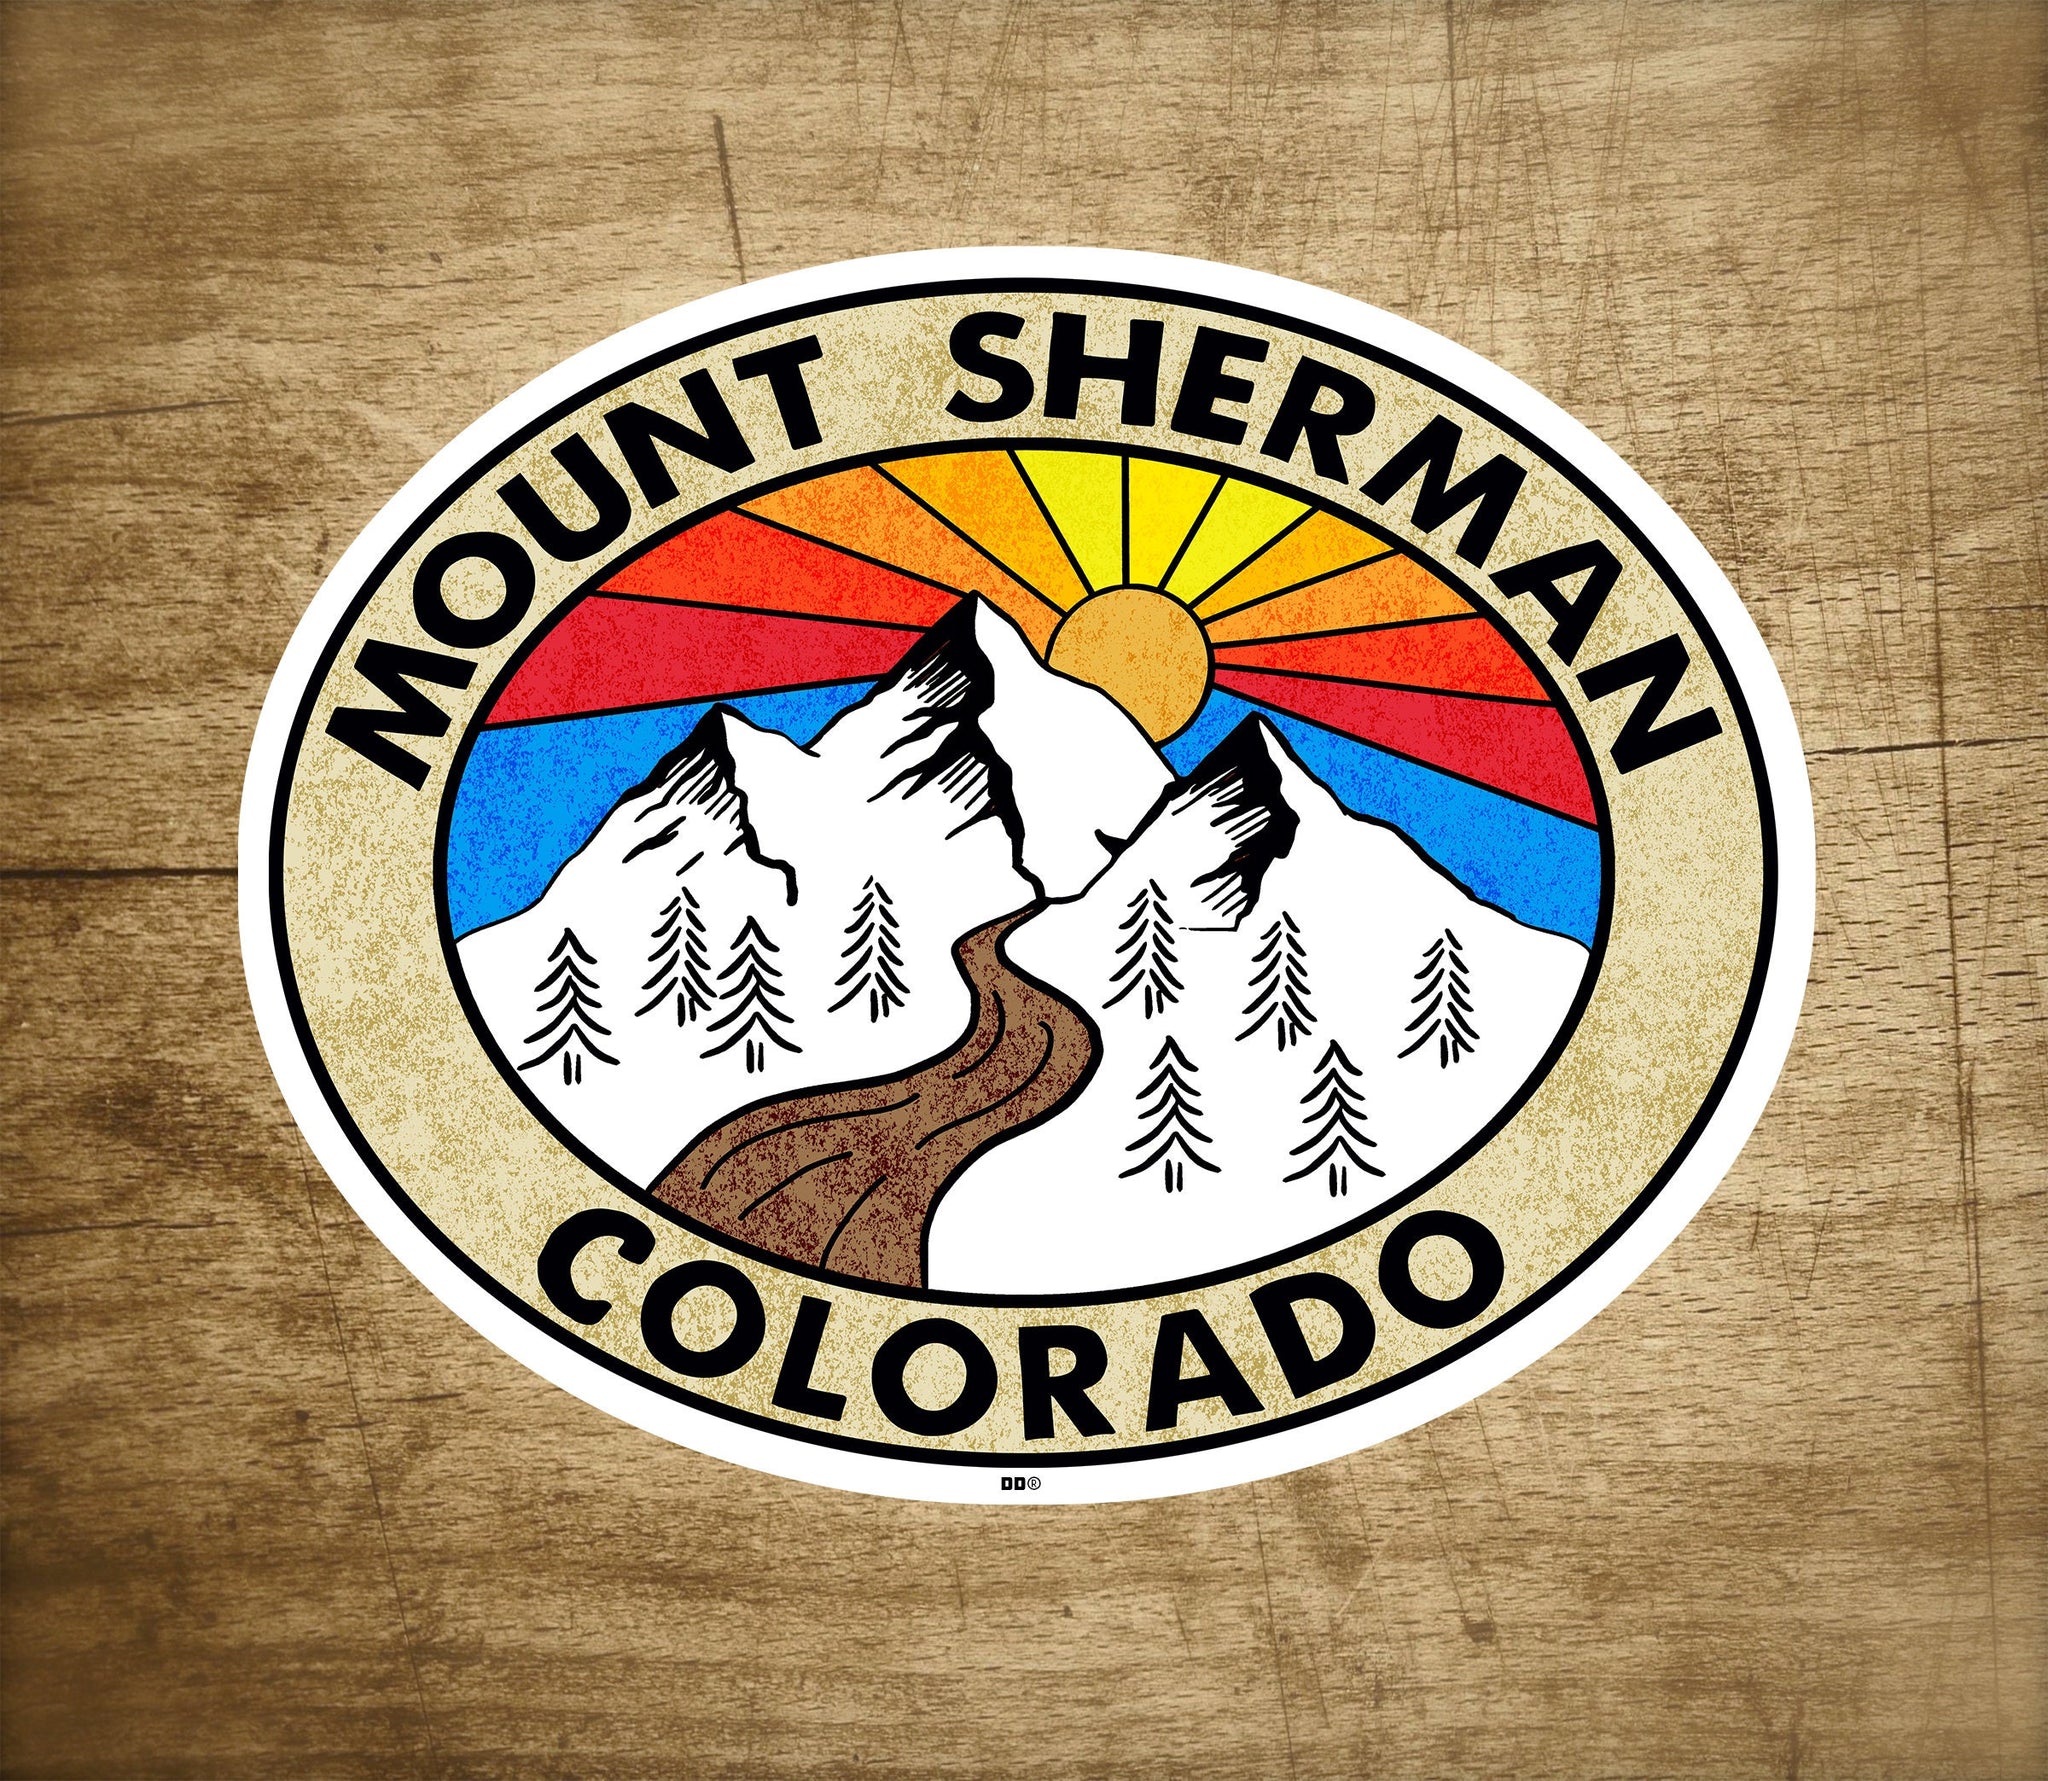 Mount Sherman Colorado Decal Sticker 3.5" x 2.75"